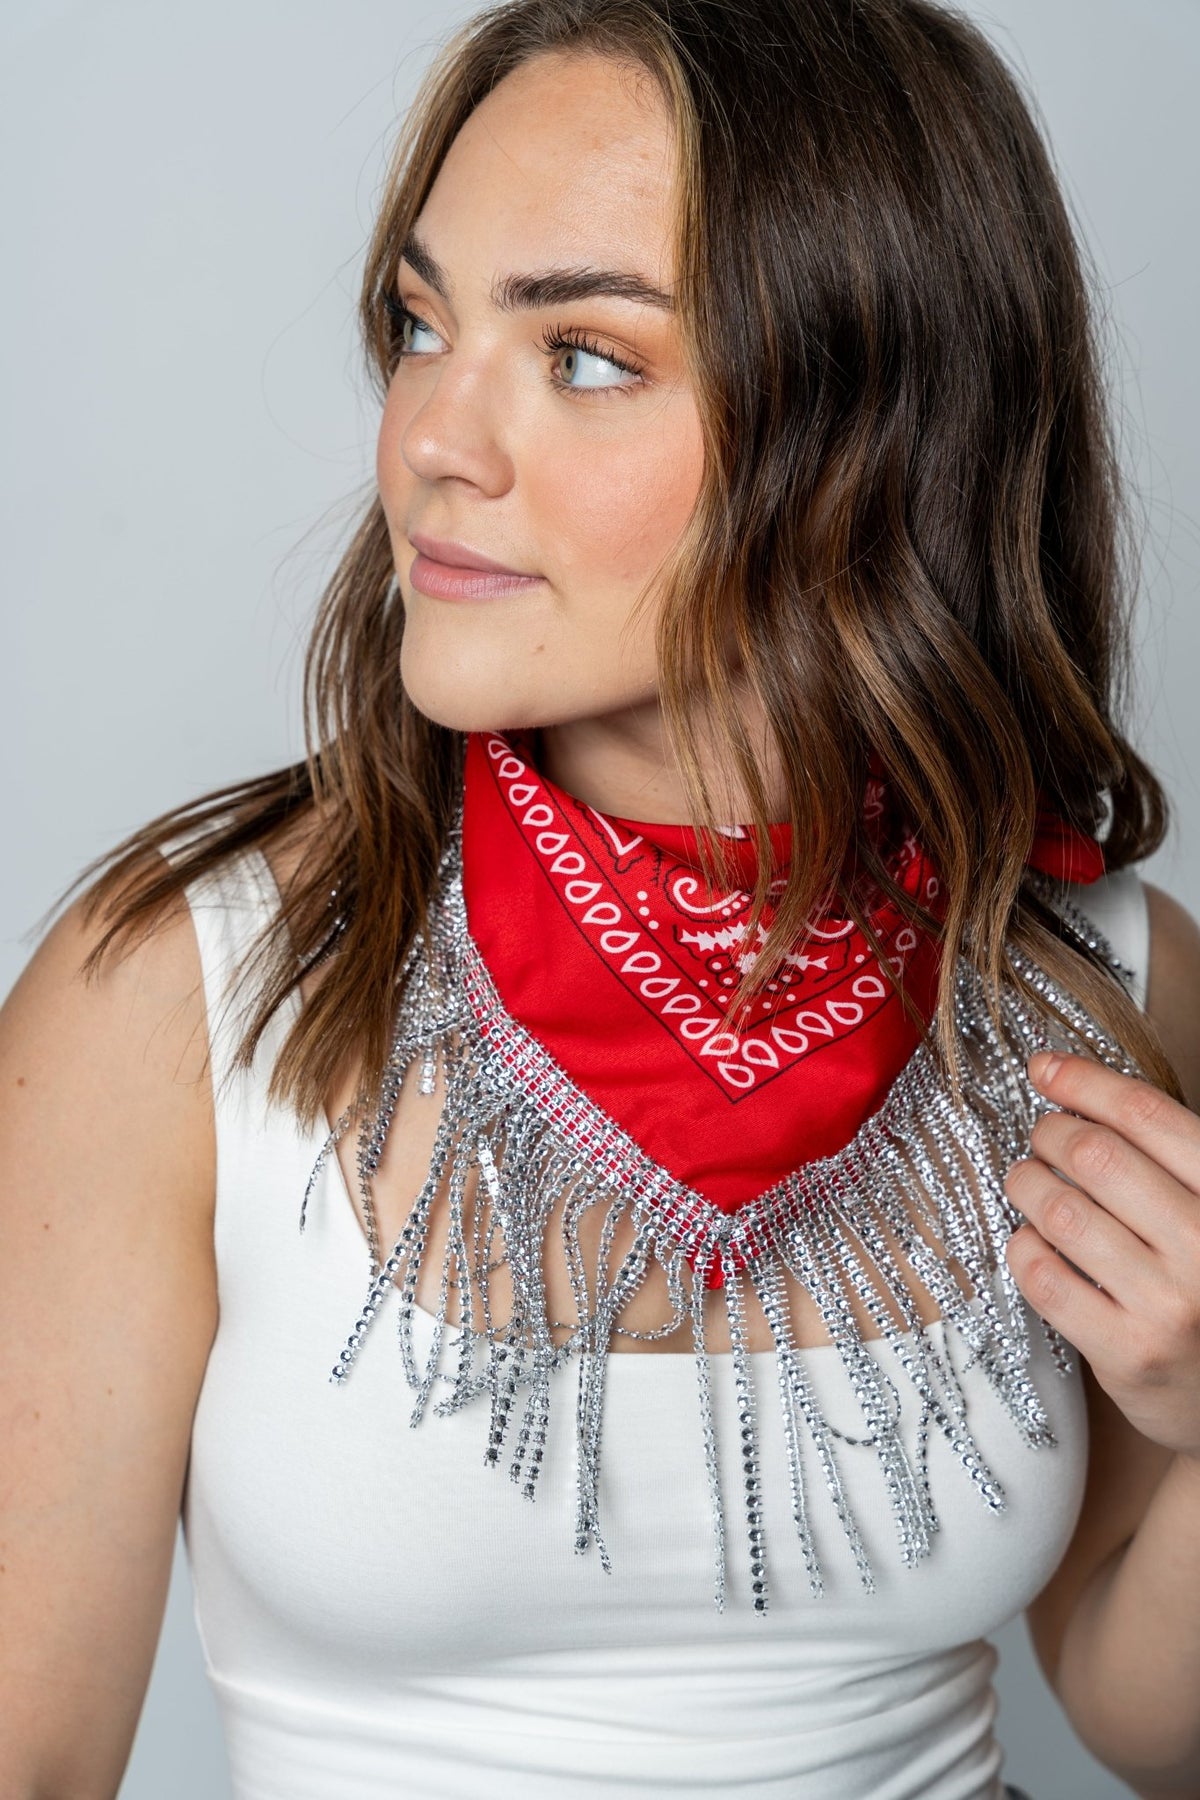 Paisley rhinestone bandana scarf red - Trendy Scarves at Lush Fashion Lounge Boutique in Oklahoma City